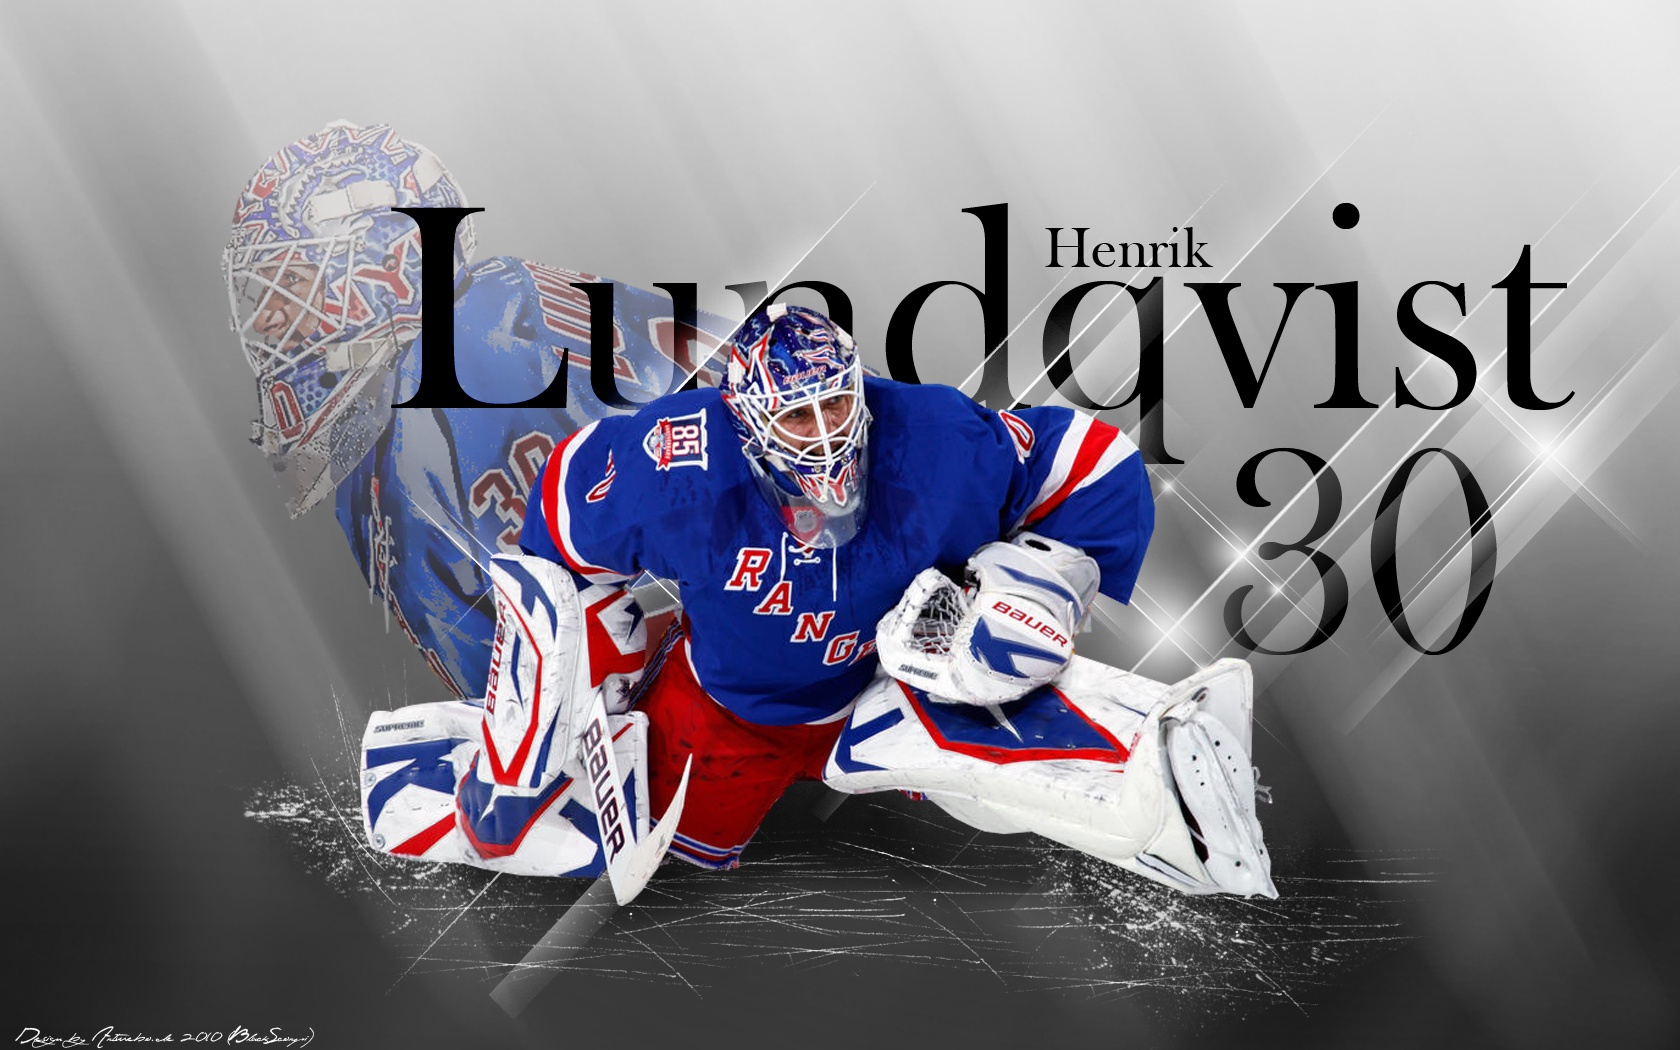 NHL New York Rangers Hockey Player Henrik Ludqvist wallpaper HD